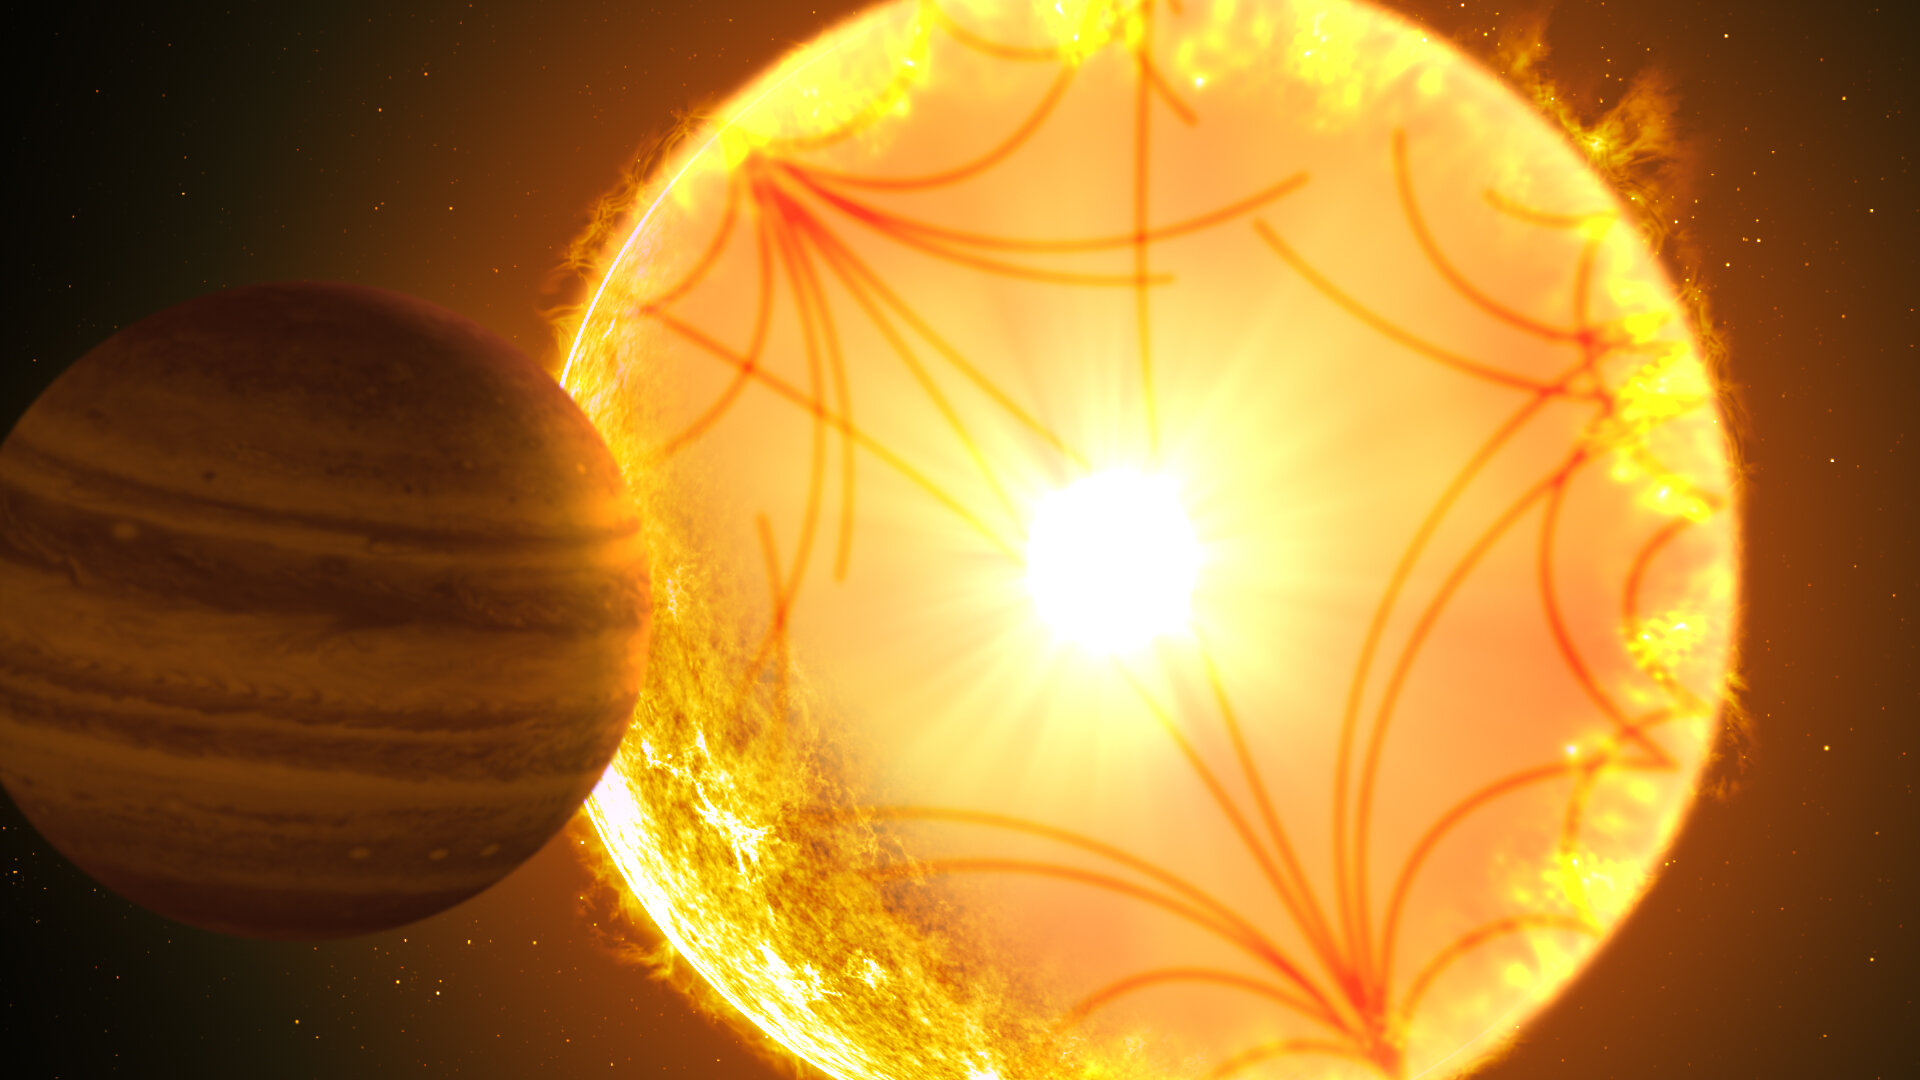 Alien planet found spiraling to its doom around an aging star